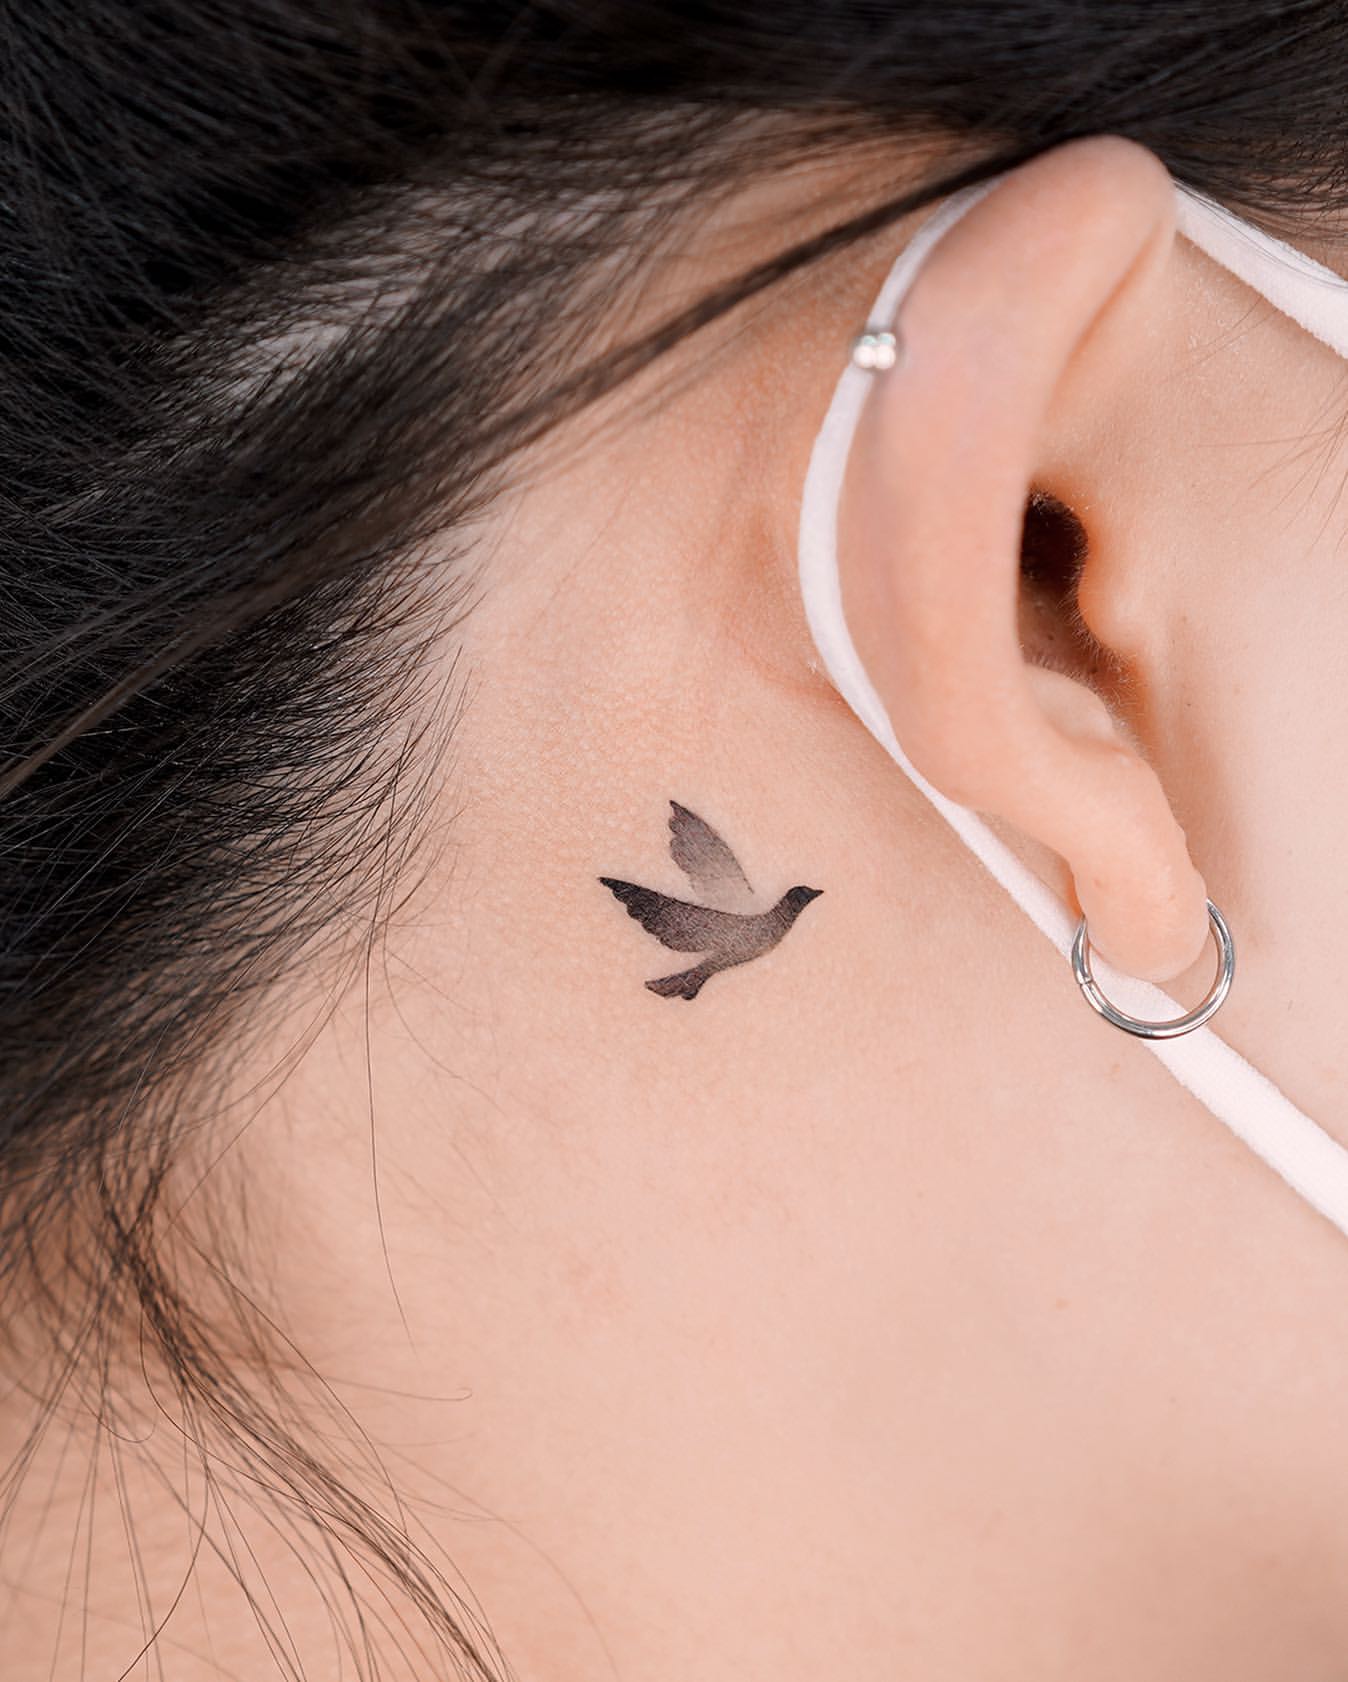 Behind the Ear Tattoos 2